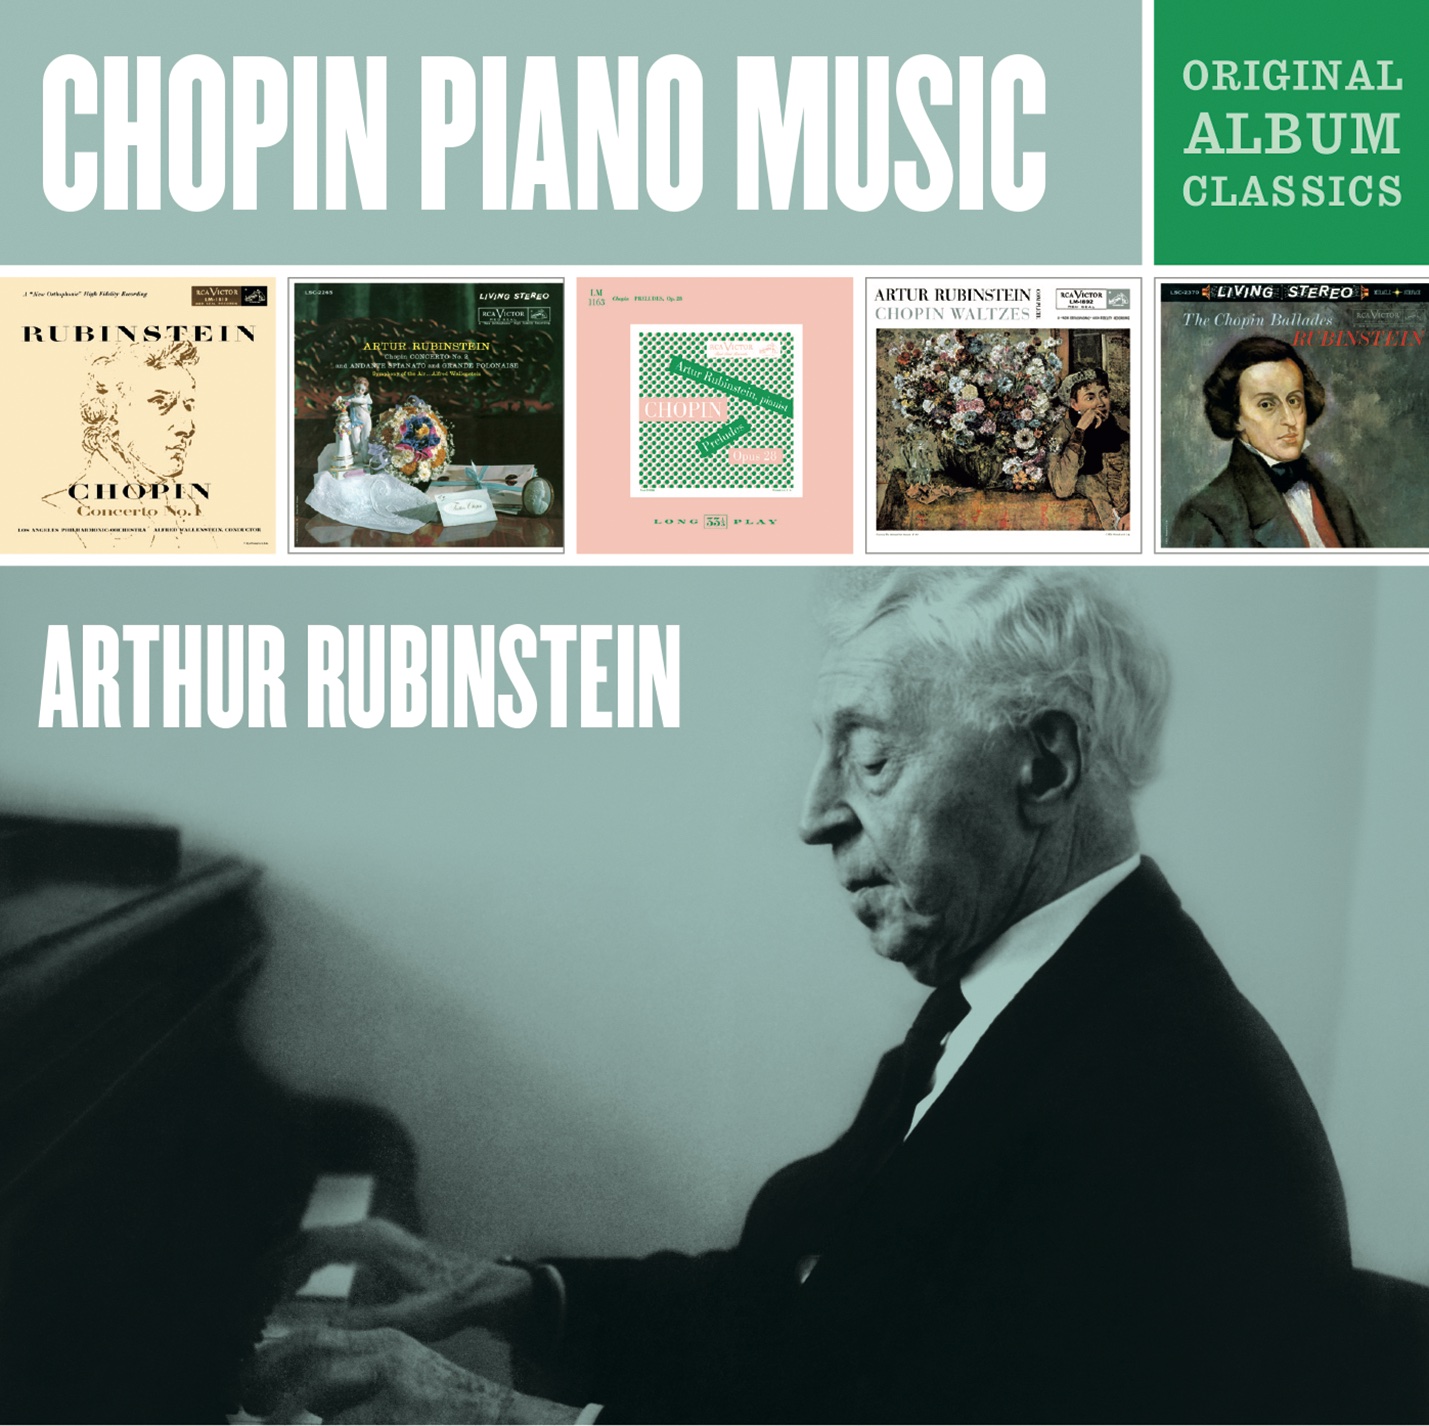 Arthur Rubinstein - Biography, Artist